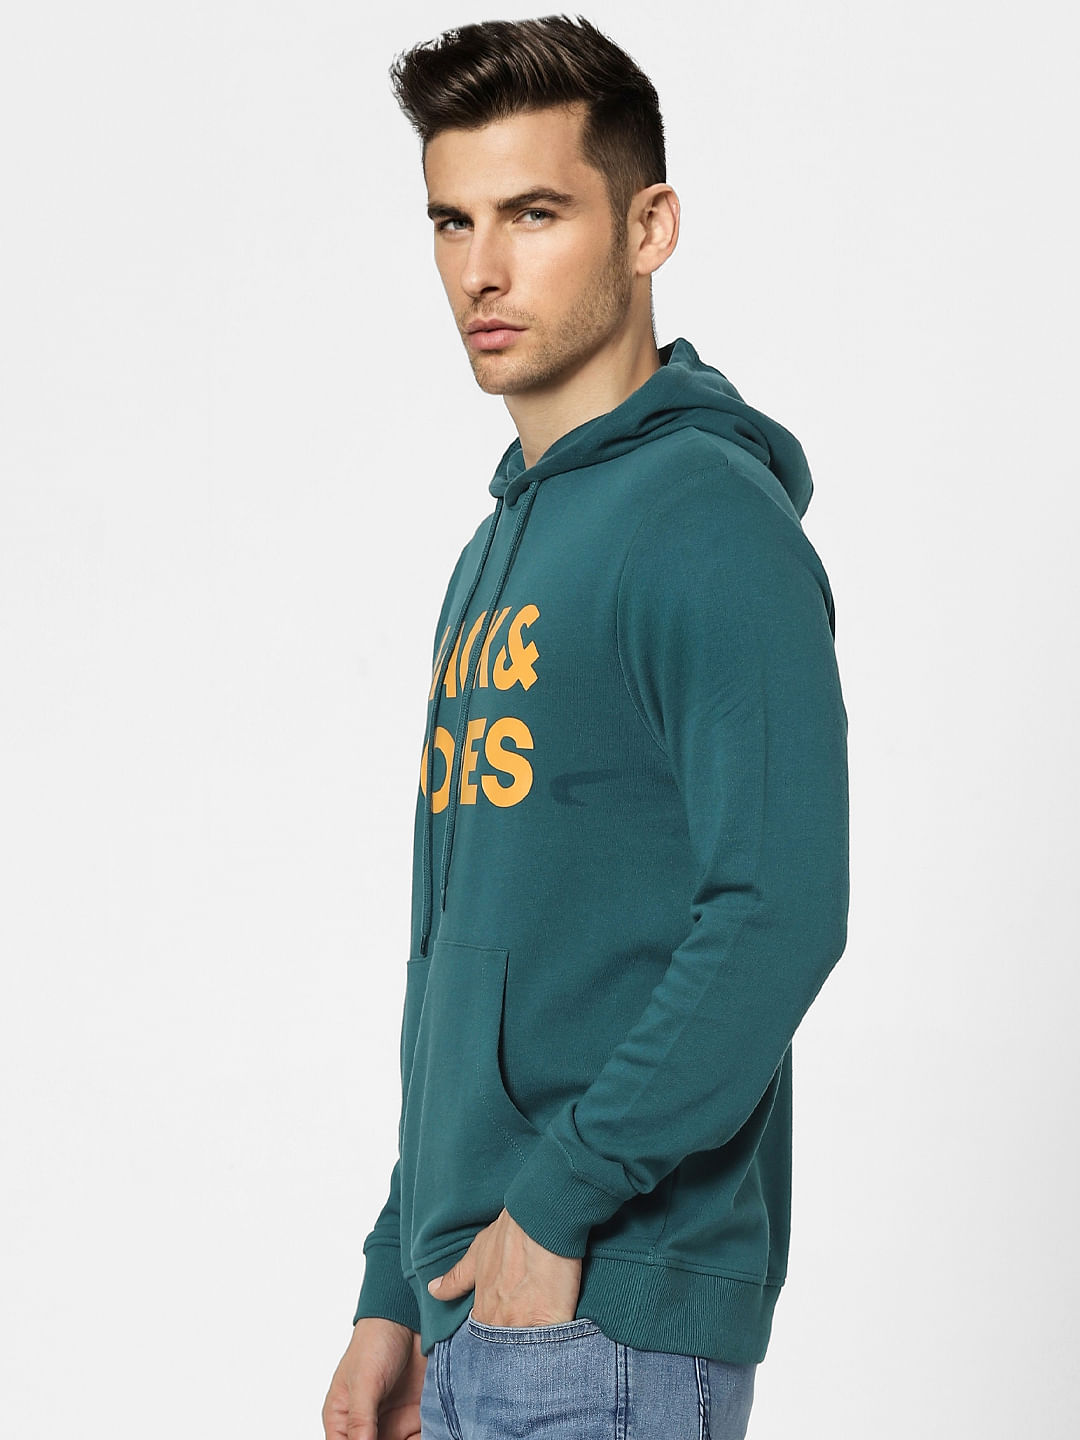 discount 57% Jack & Jones sweatshirt MEN FASHION Jumpers & Sweatshirts Hoodie Green L 